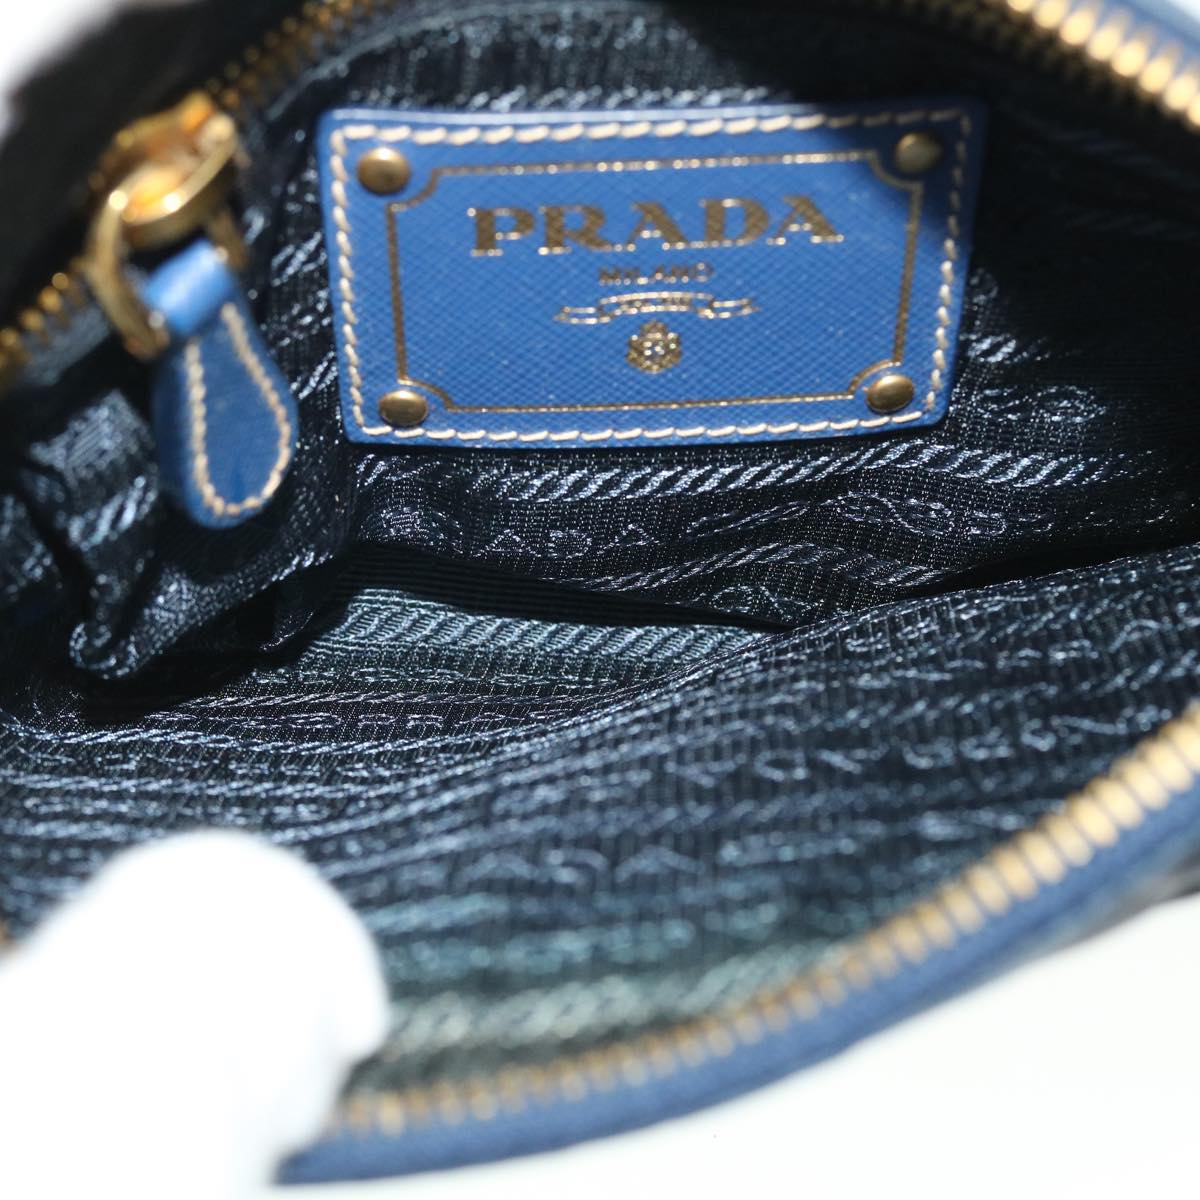 PRADA Shoulder Bag Nylon Saffiano Leather Blue Auth bs8101